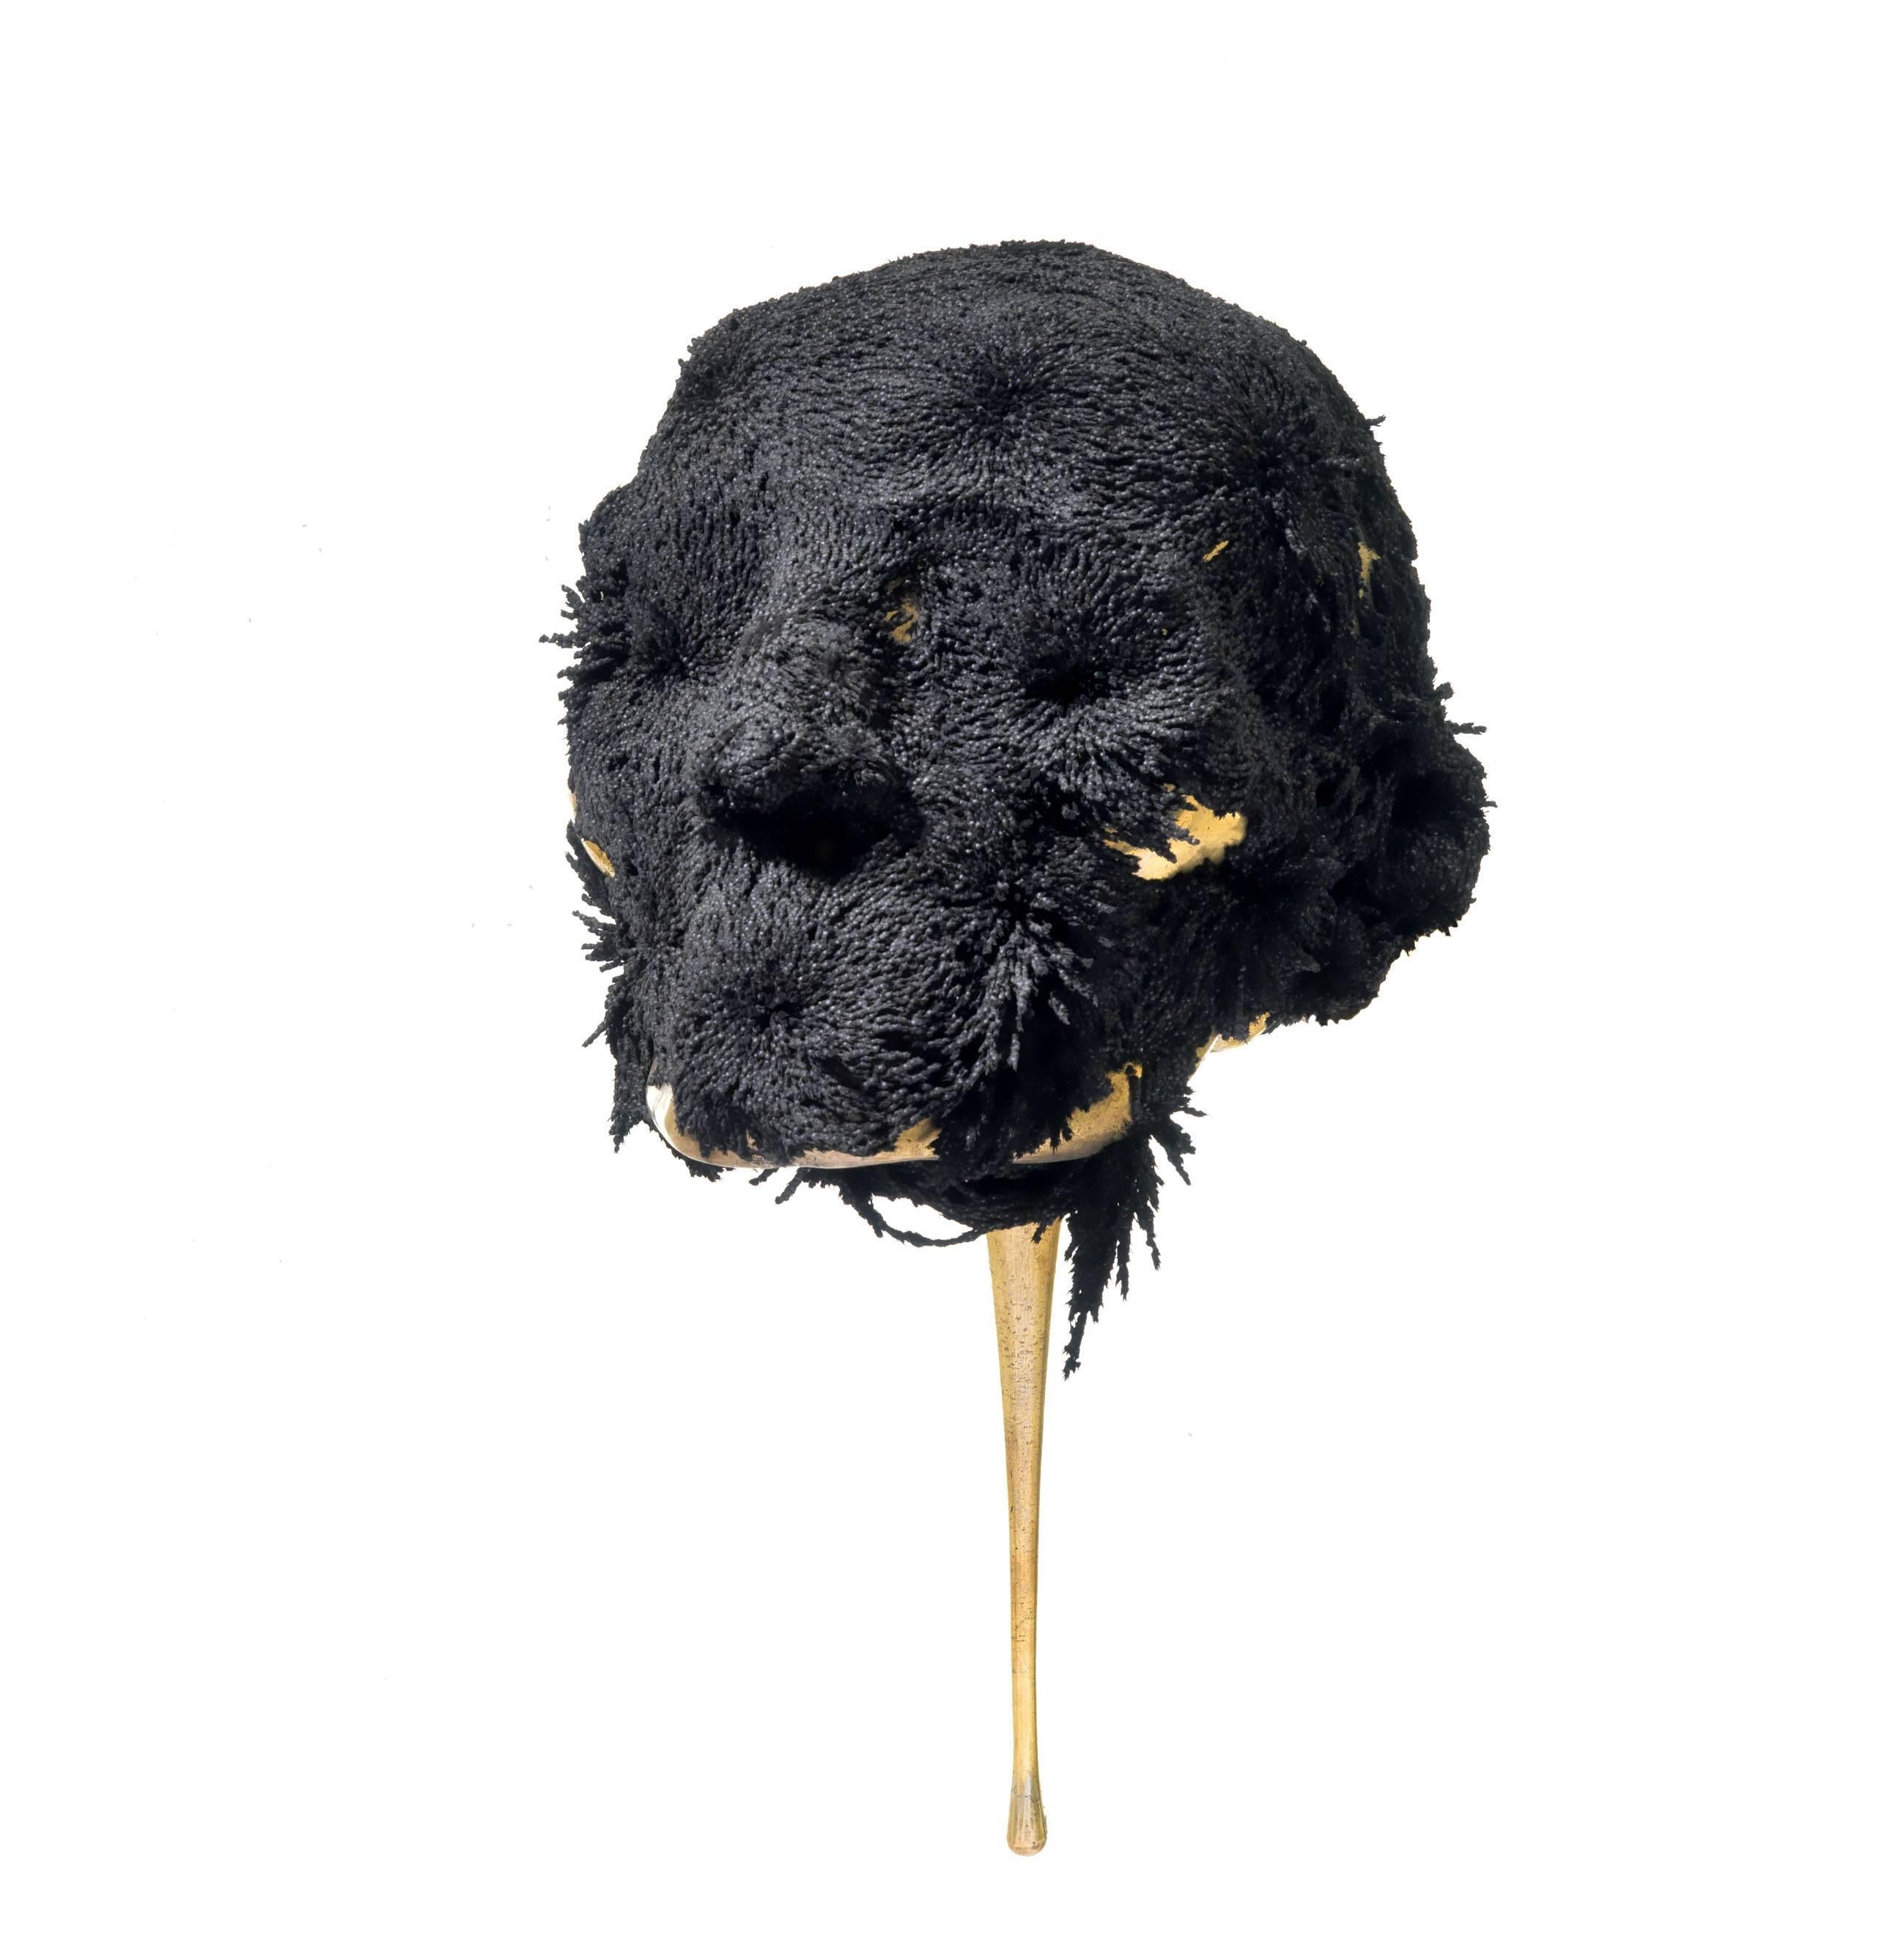 Jericho mask by Romain Langlois - Skull bronze sculpture, neodymium, golden For Sale 1